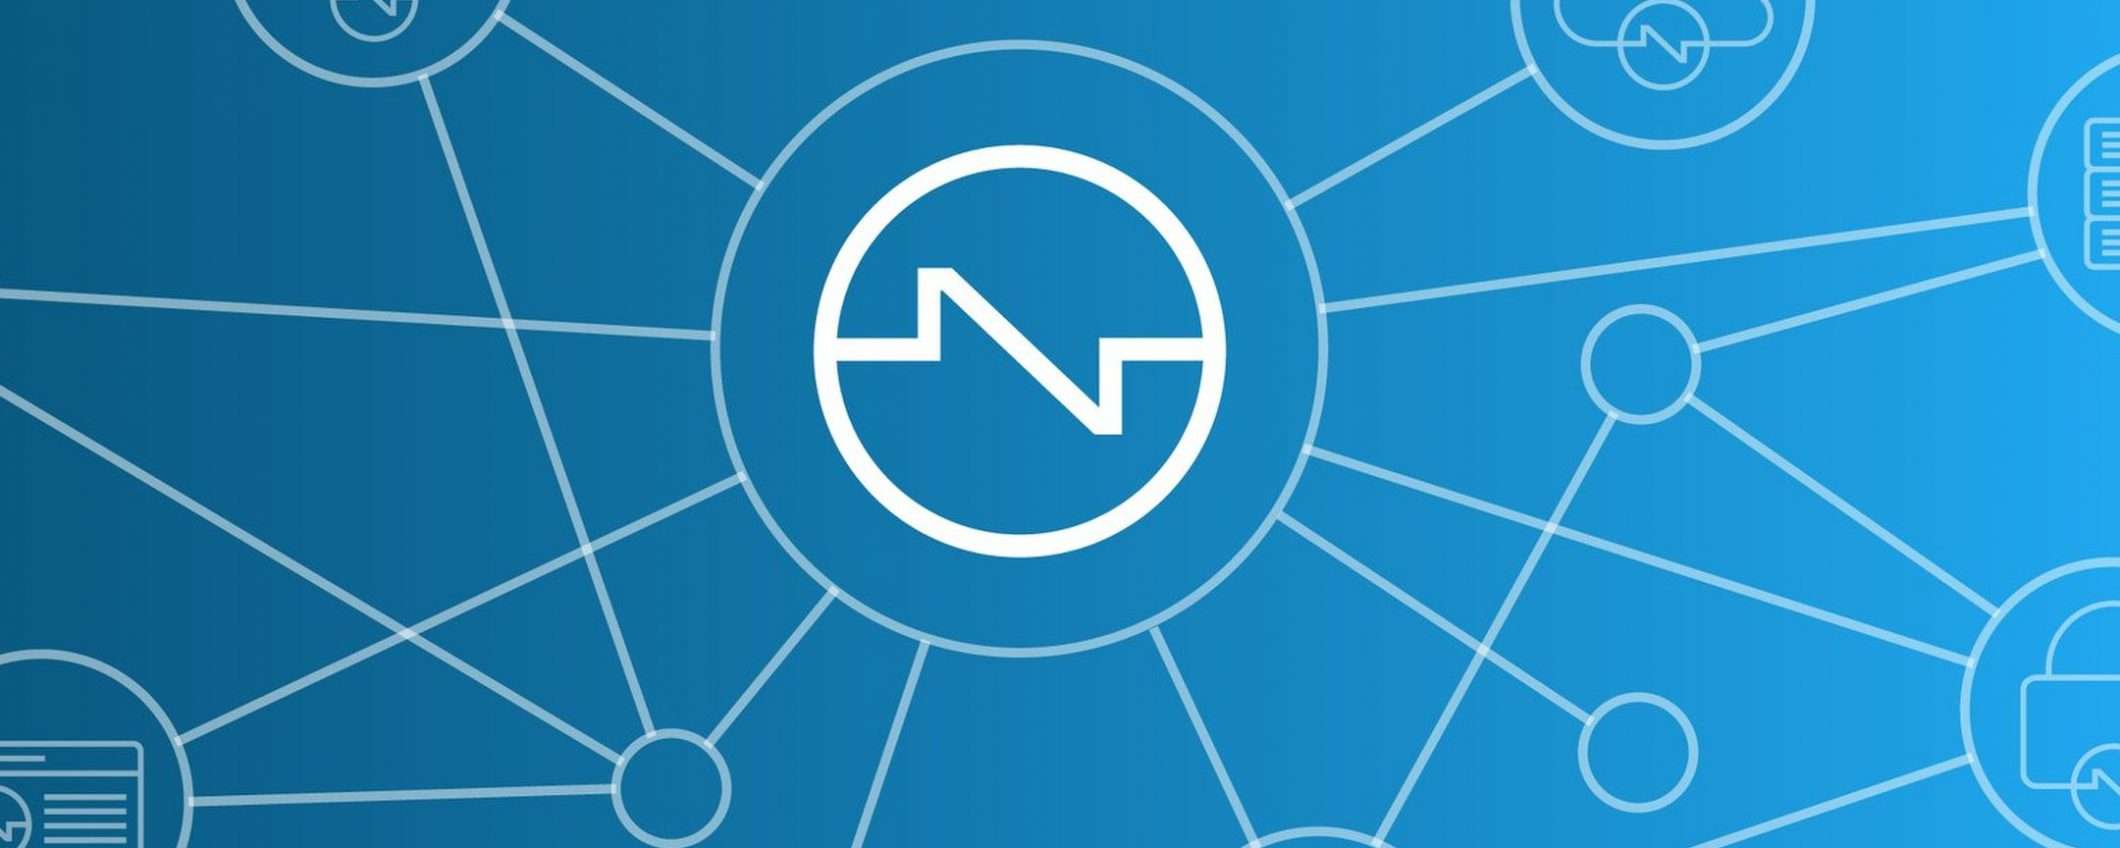 Netsons: web hosting per tutte le tasche